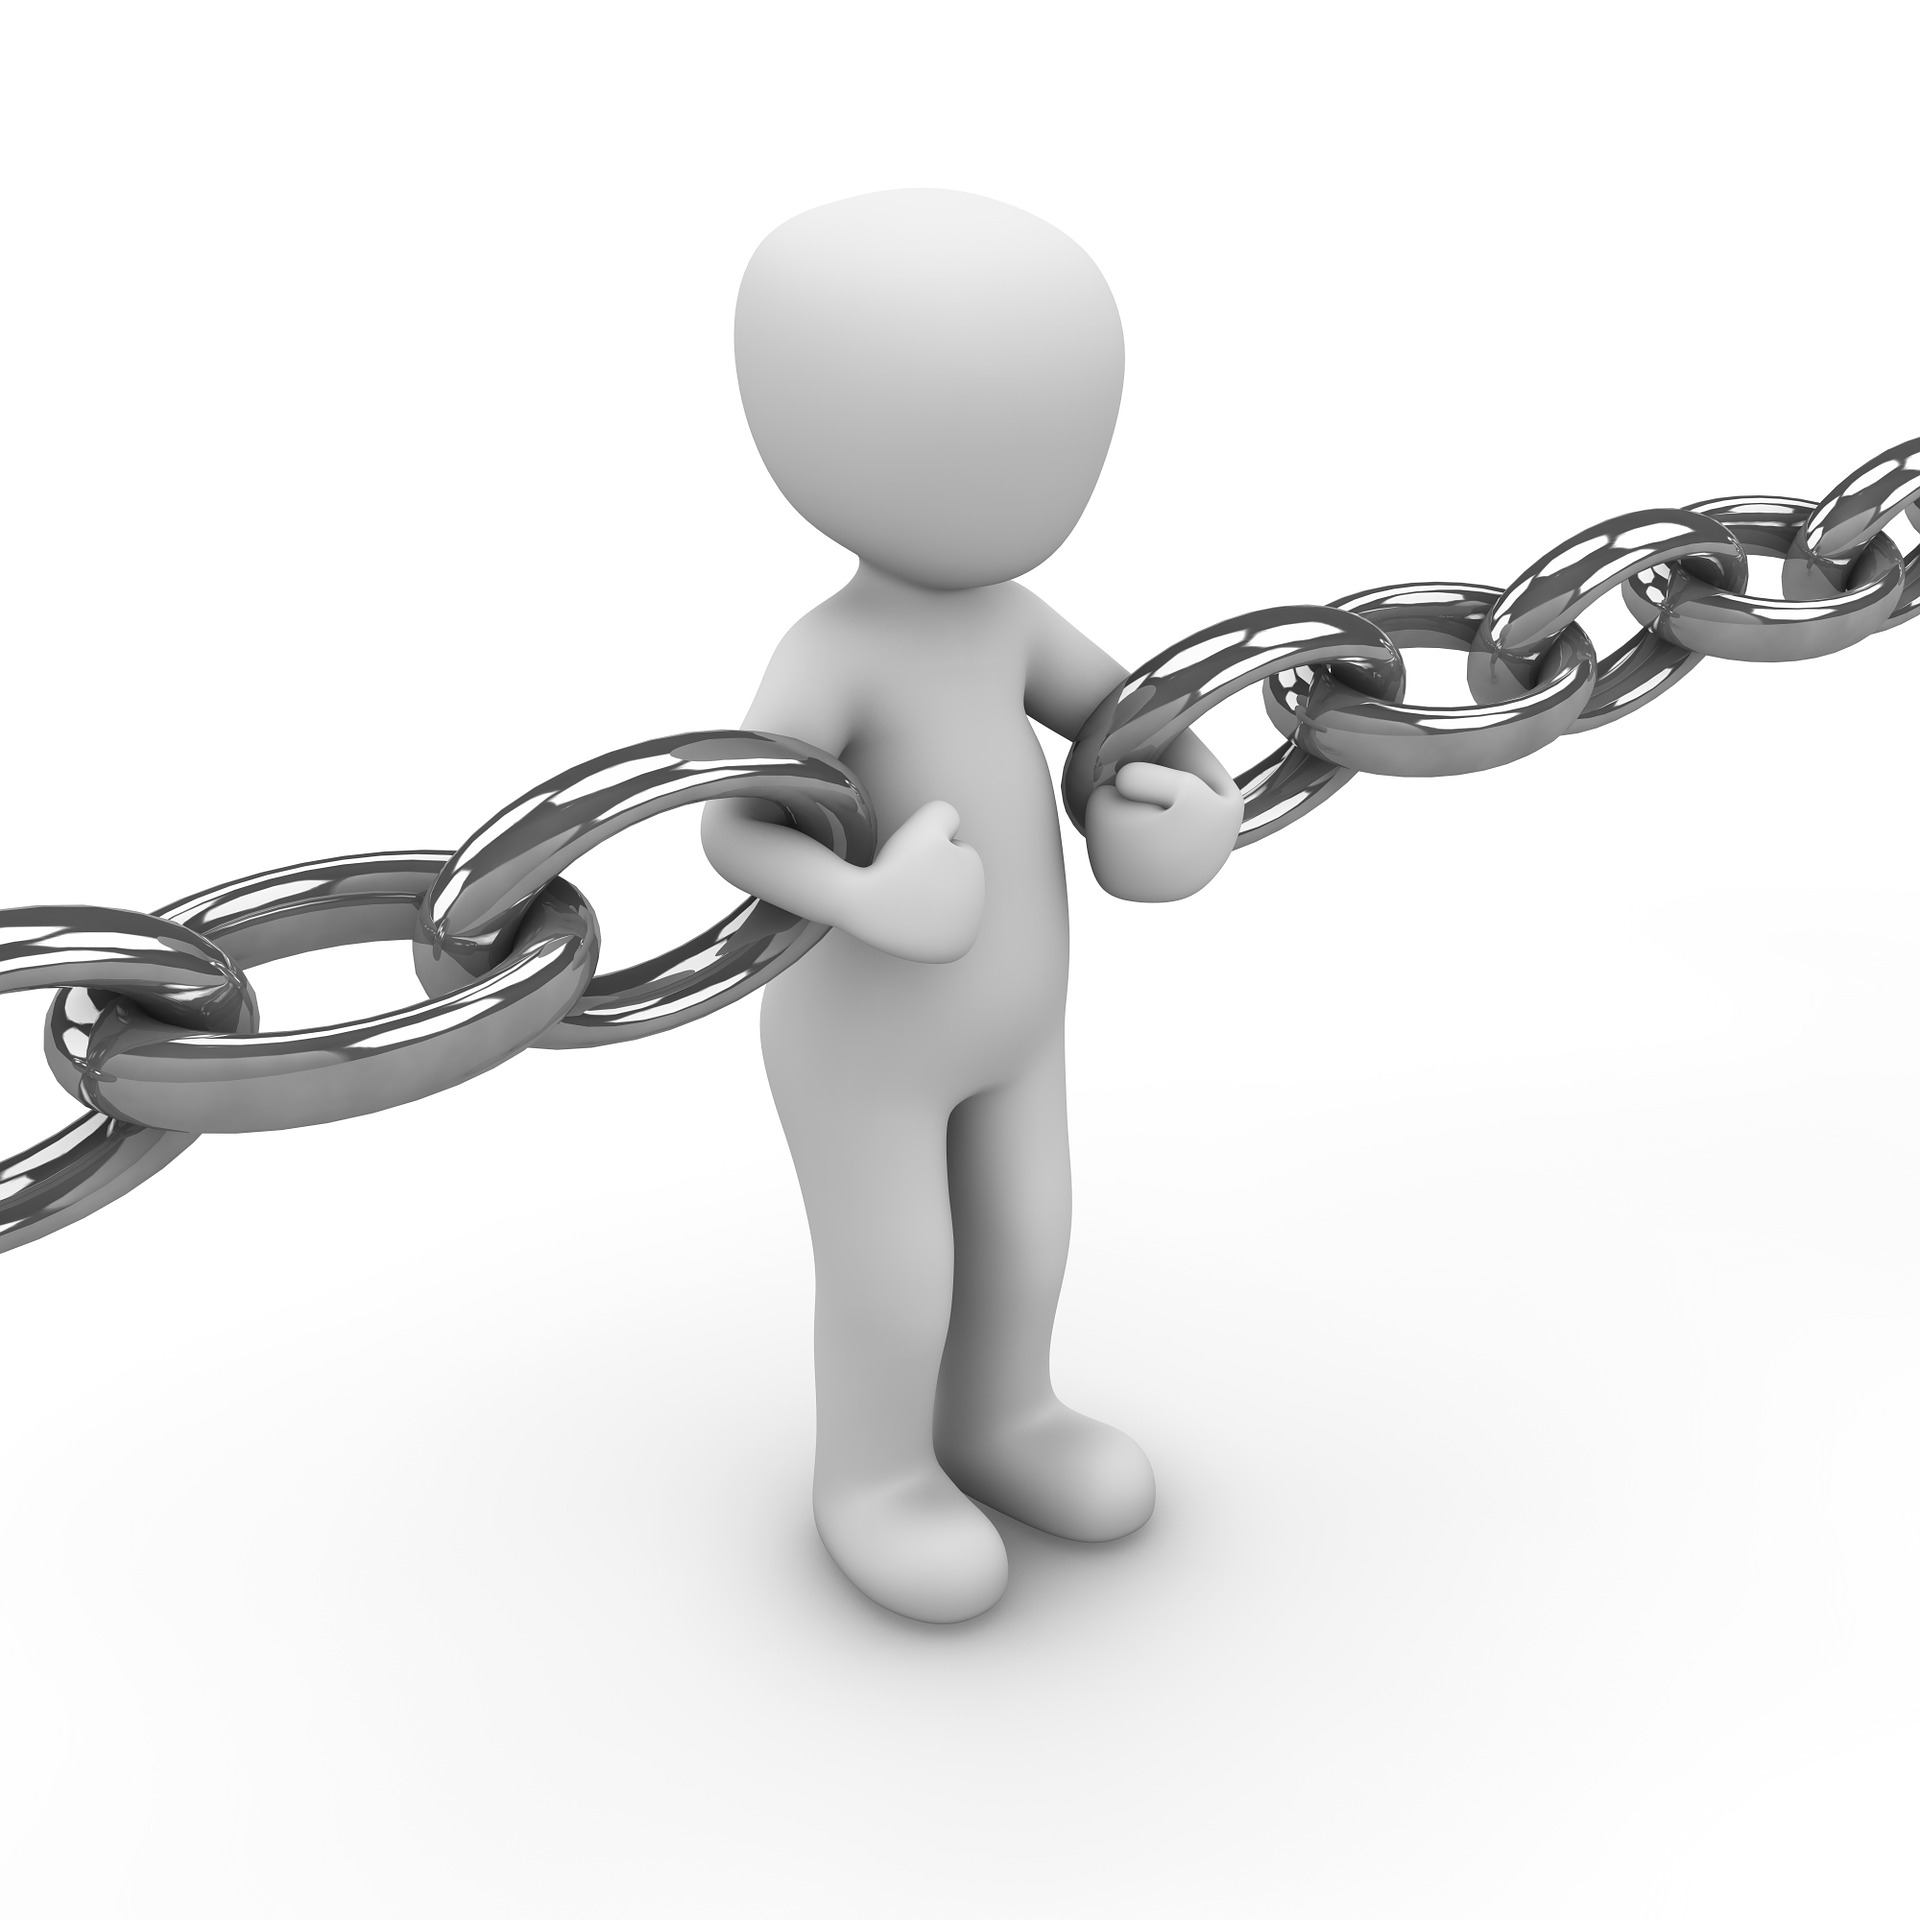 Optional Chaining in JavaScript